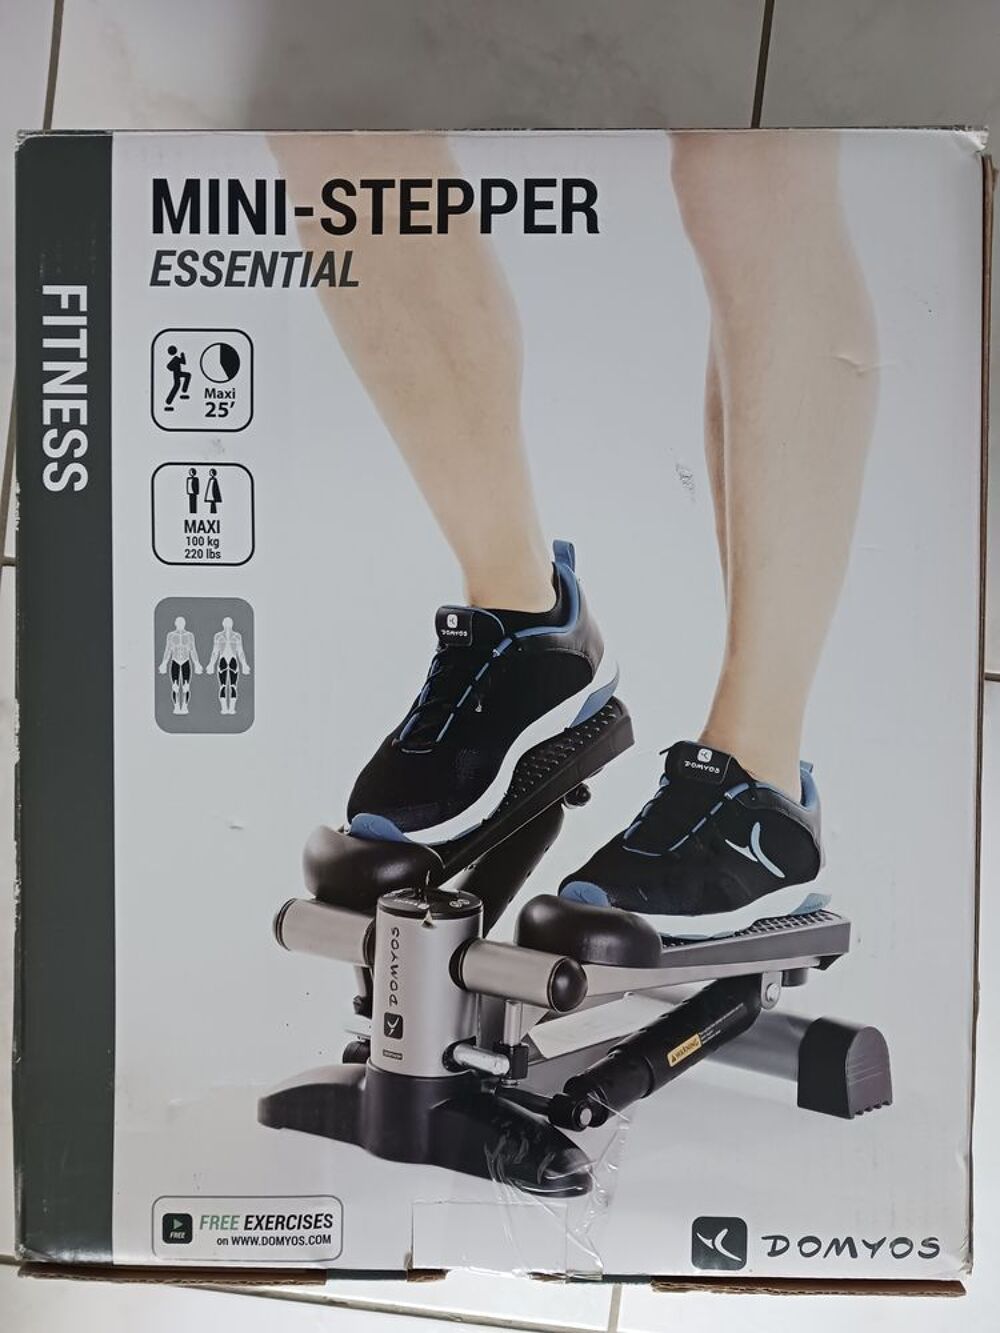 Mini- Stepper Domyos Essential Fitness Sports